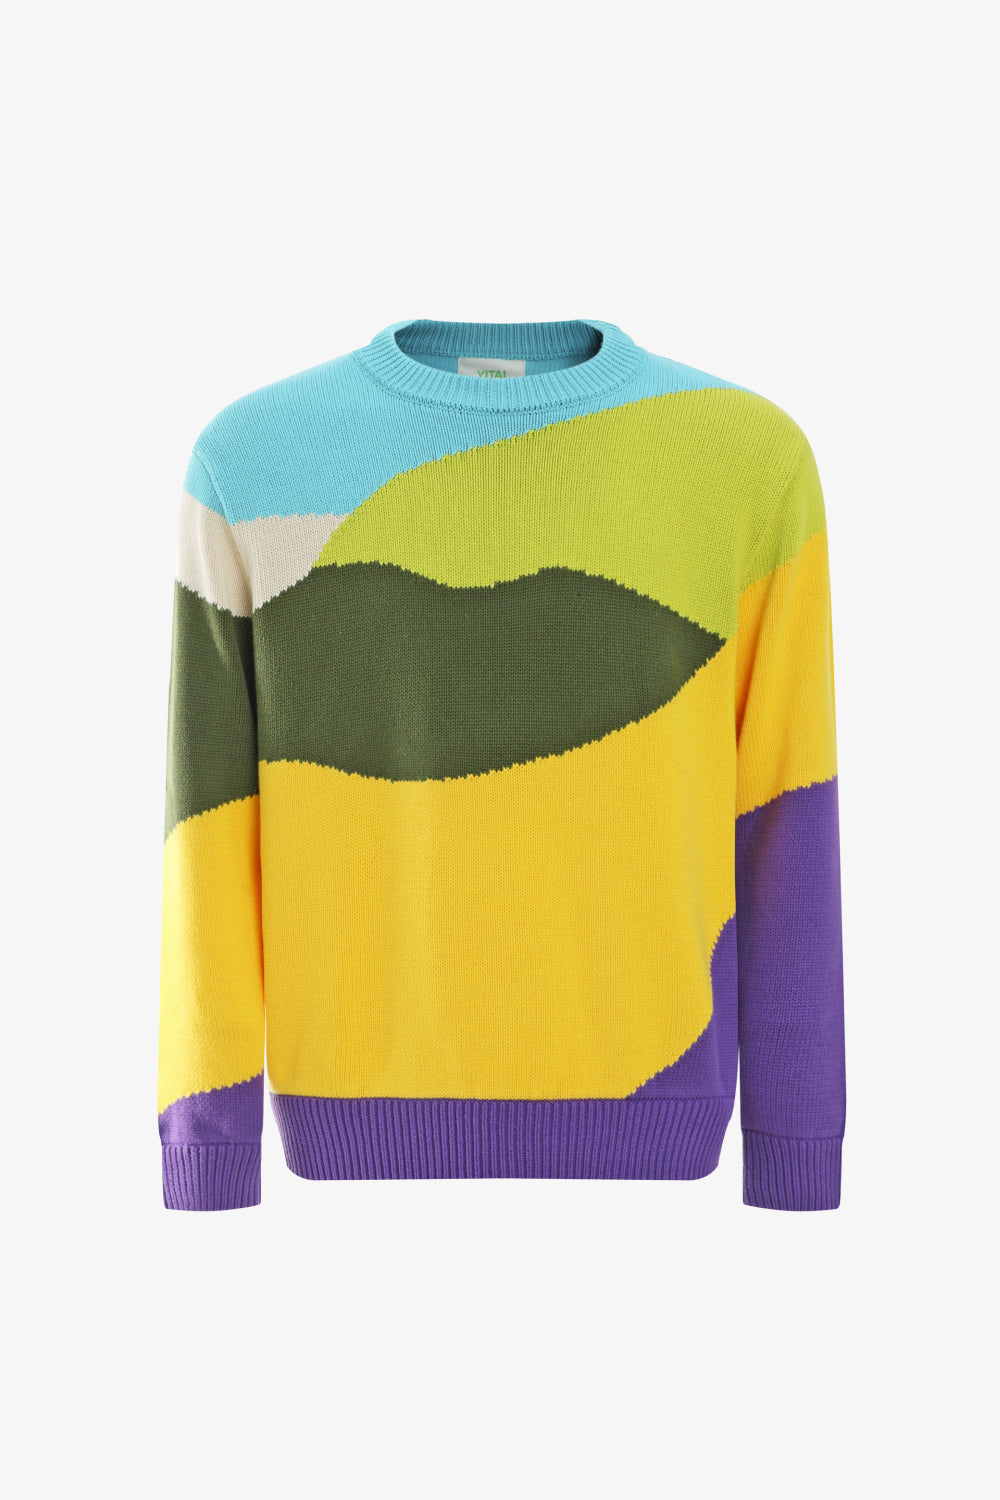 Nanohana Sweater